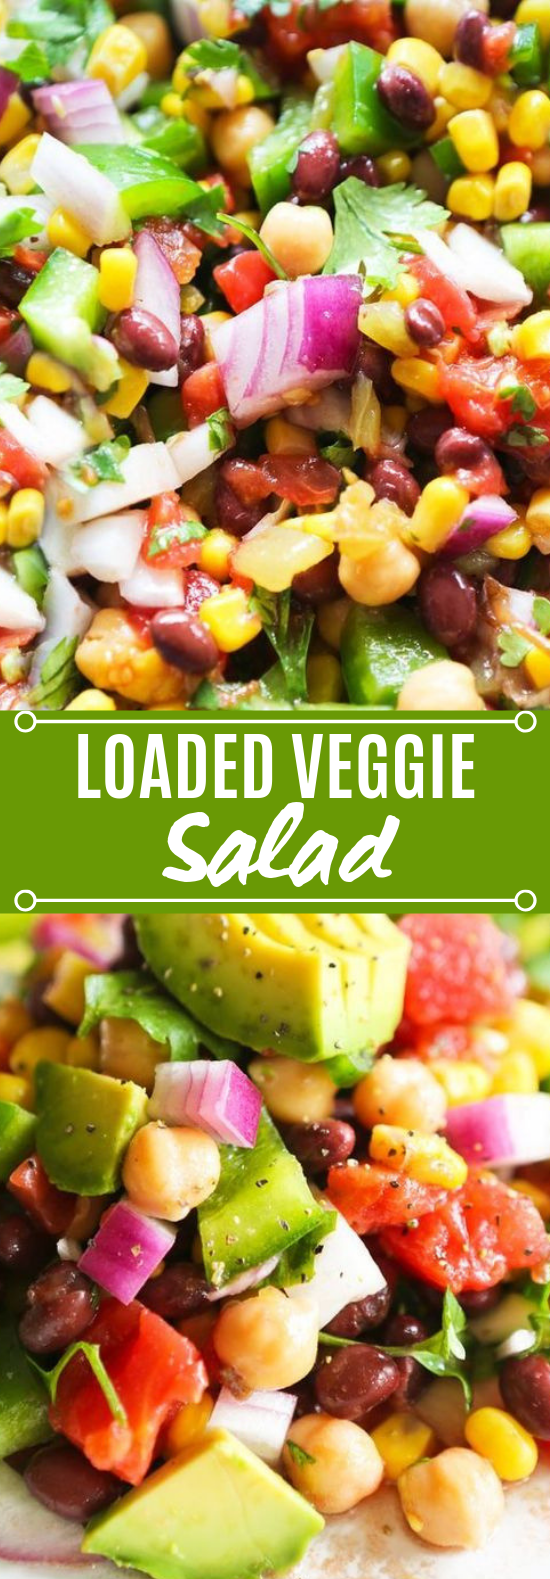 Loaded Veggie Salad with Chickpeas and Black Beans #vegan #salad